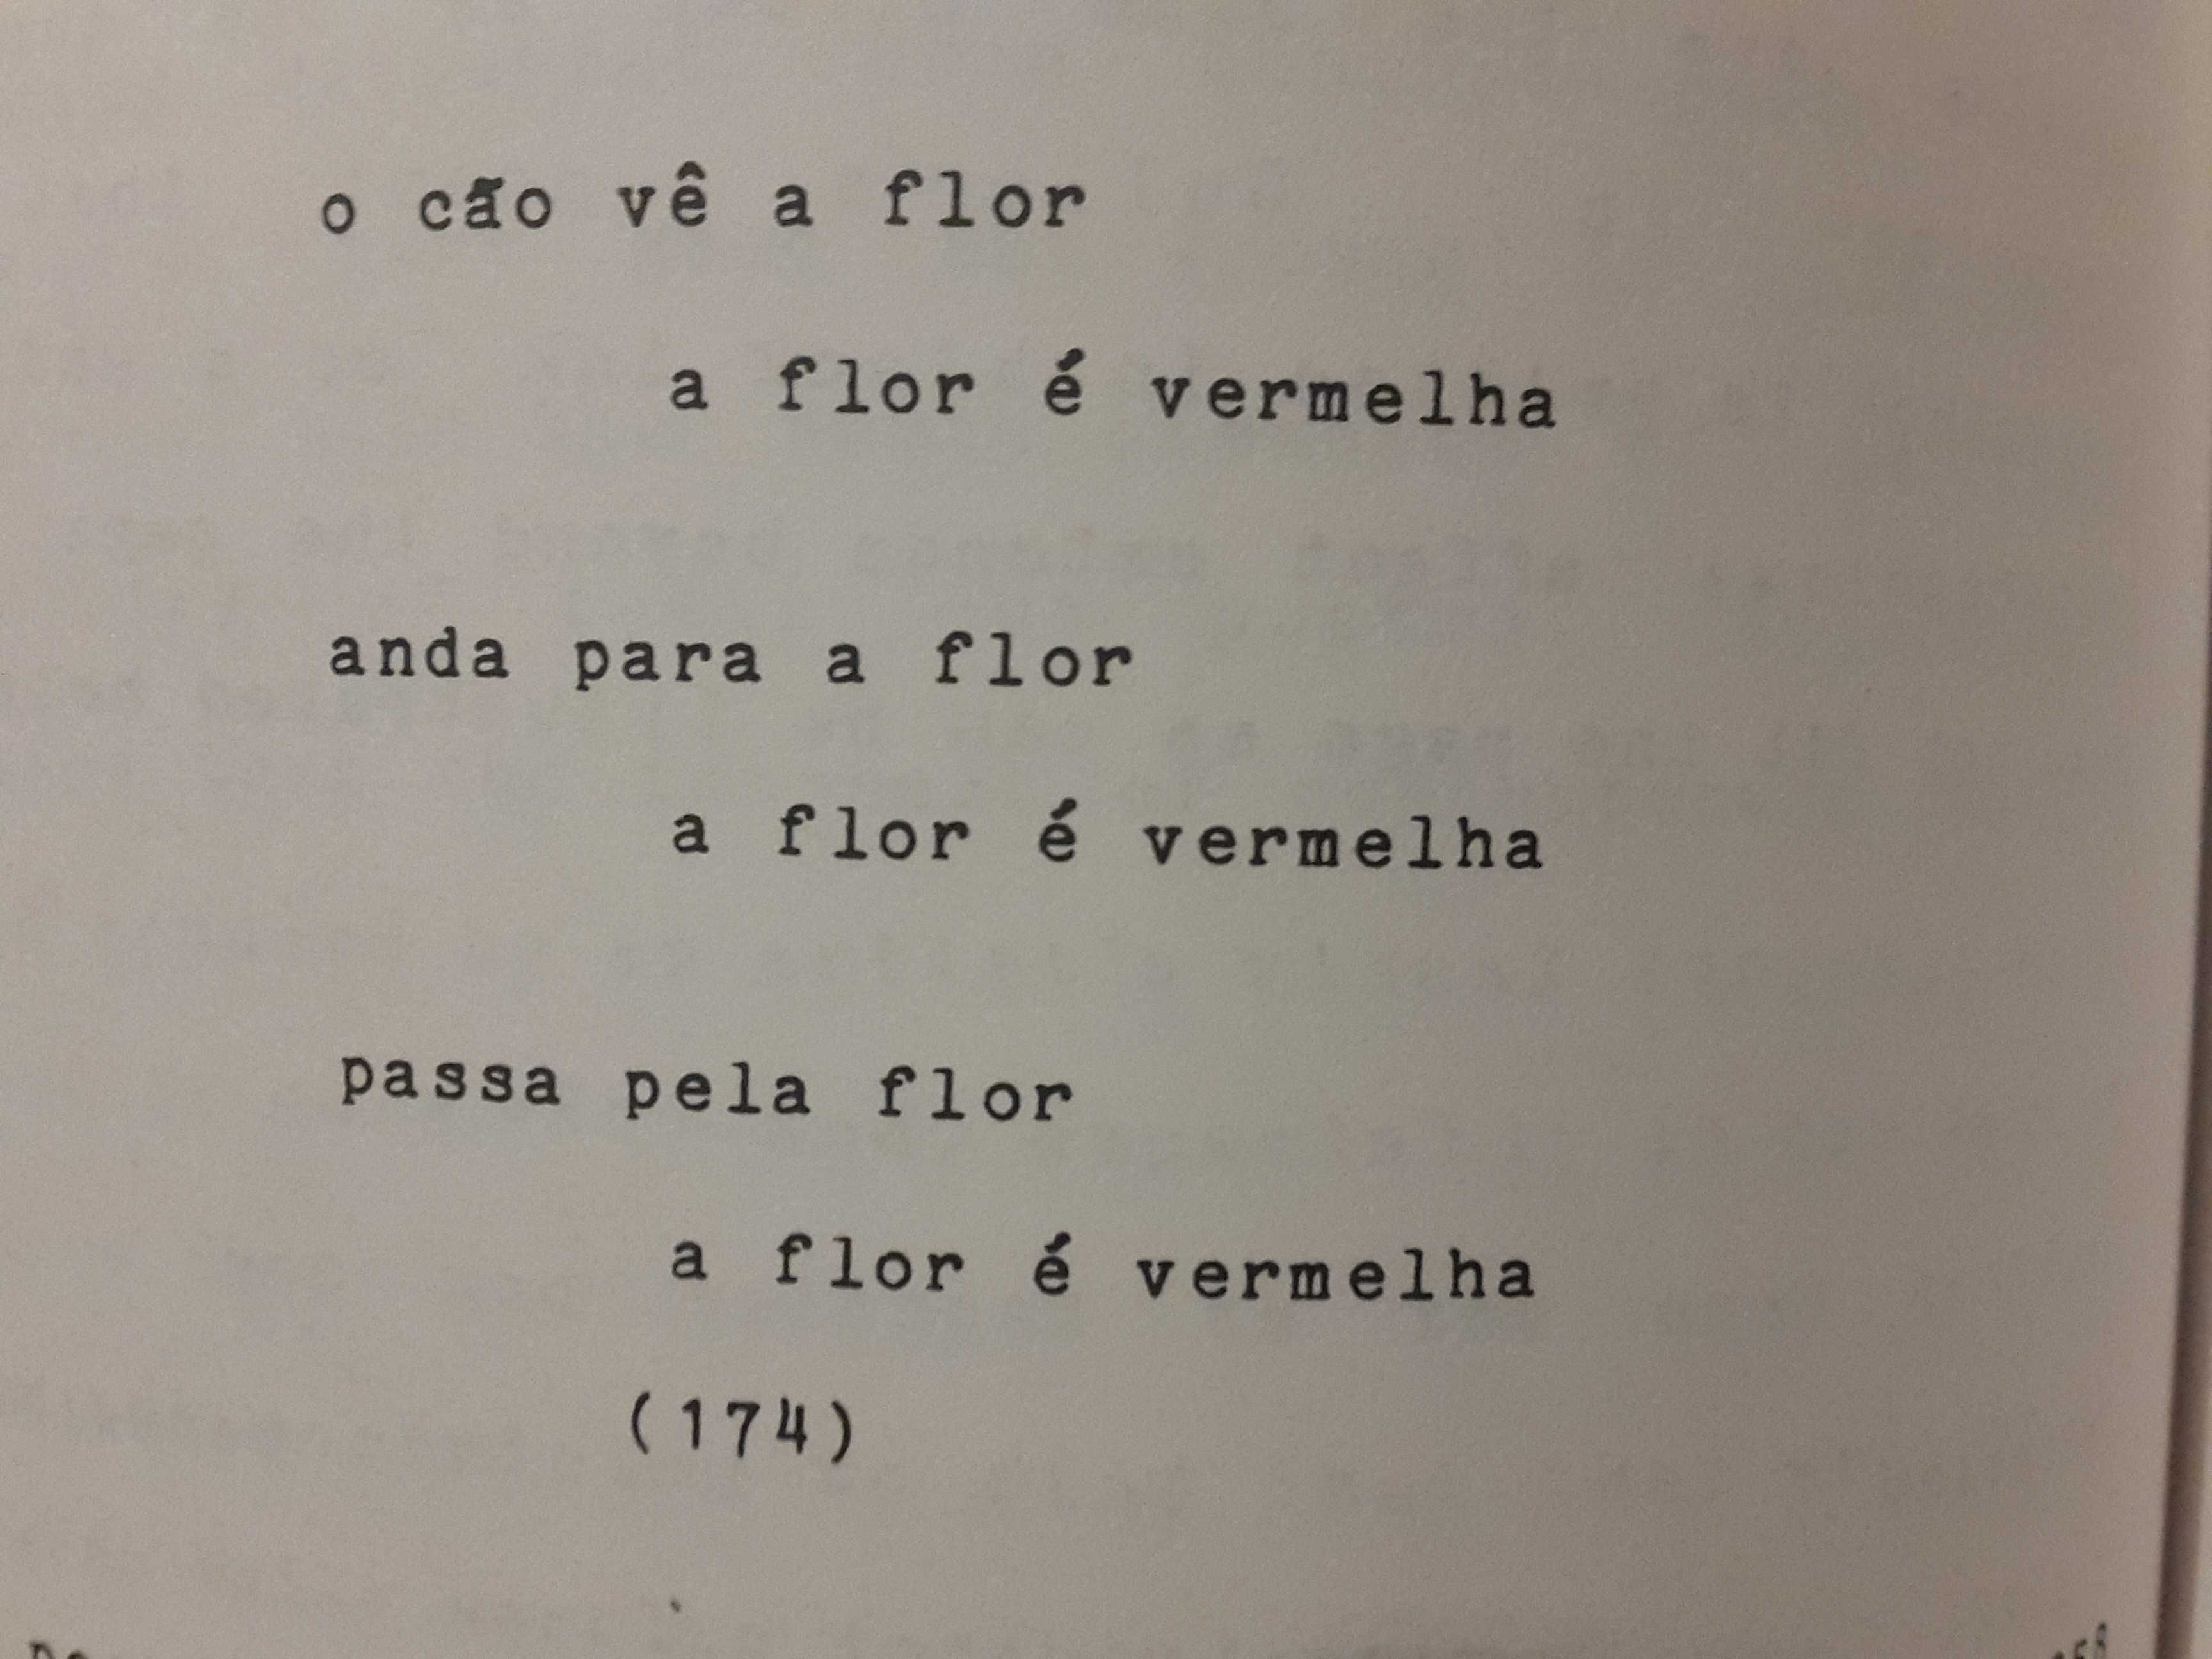 Luzia Navas-Toríbio - Ferreira Gullar's pre concretismo neo